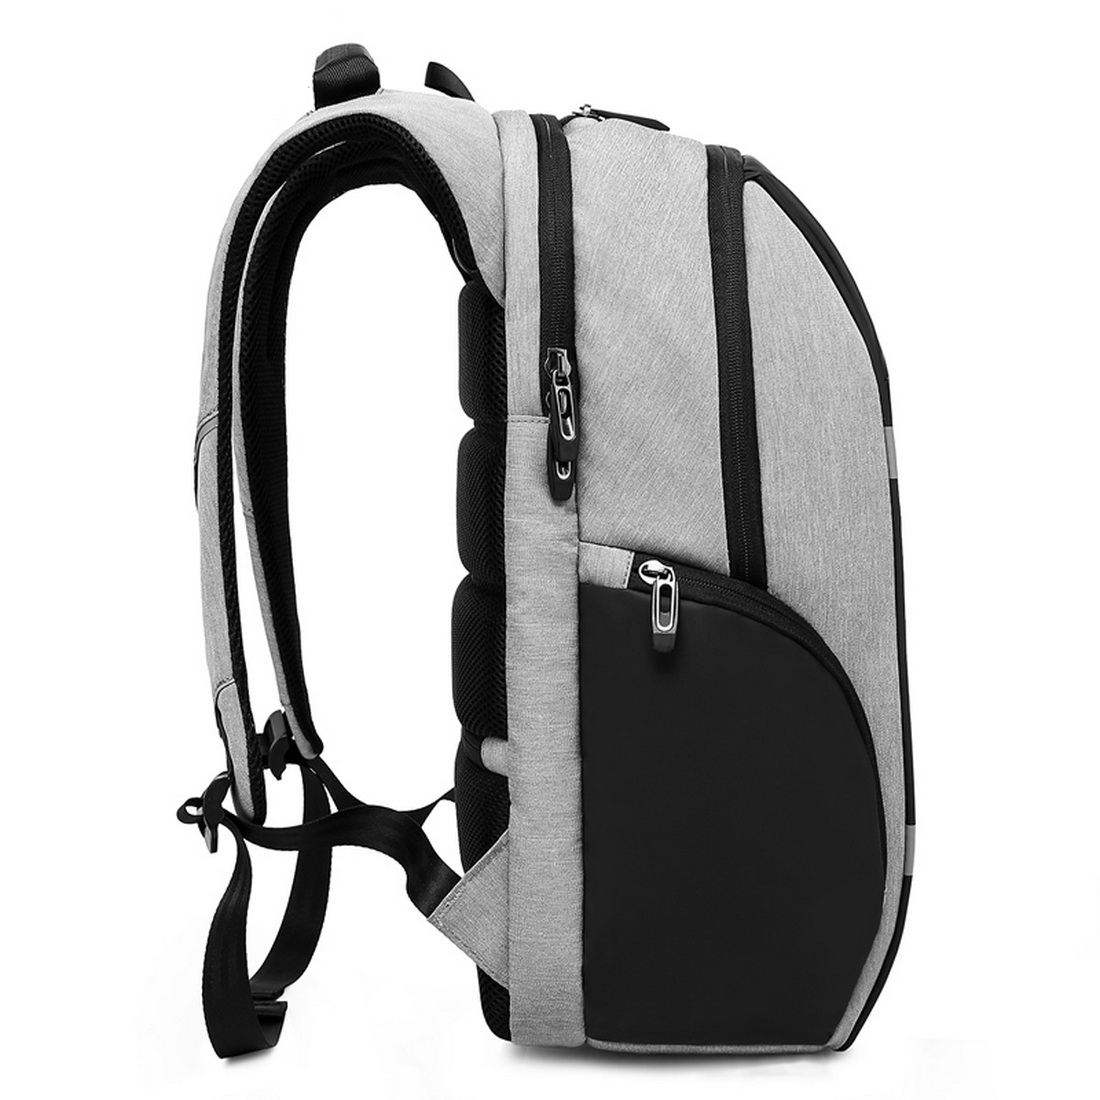 Joymoze Waterproof Oxford Backpack Fashion Casual Laptop Bag for Men and Women Grey 847